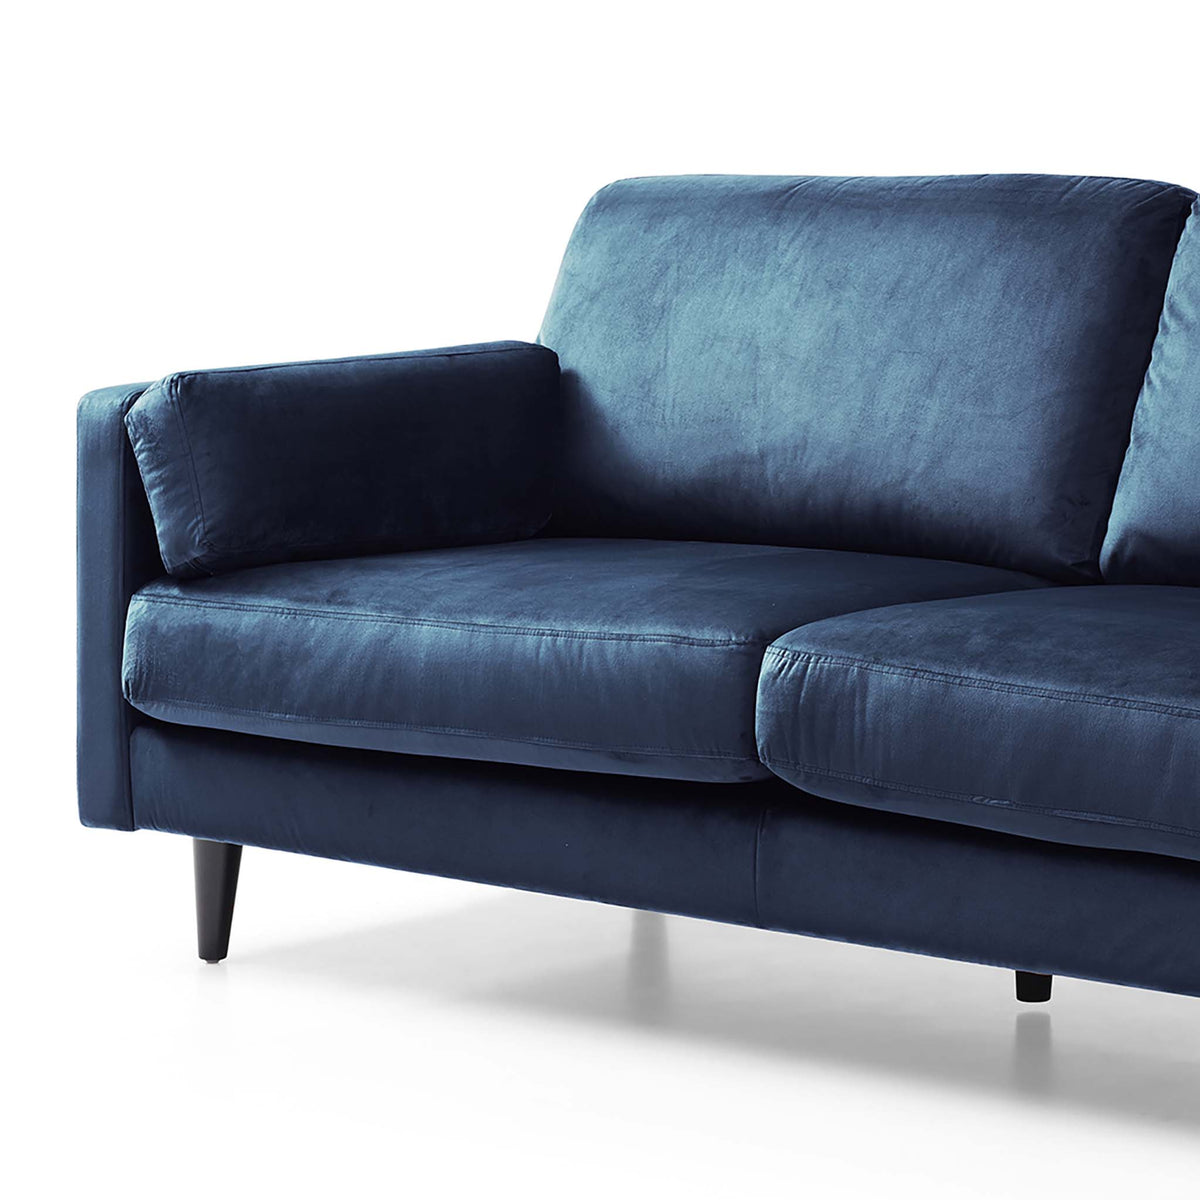 close up of the pocket sprung seats on the Elsdon Blue Ink 3 Seater Velvet Sofa